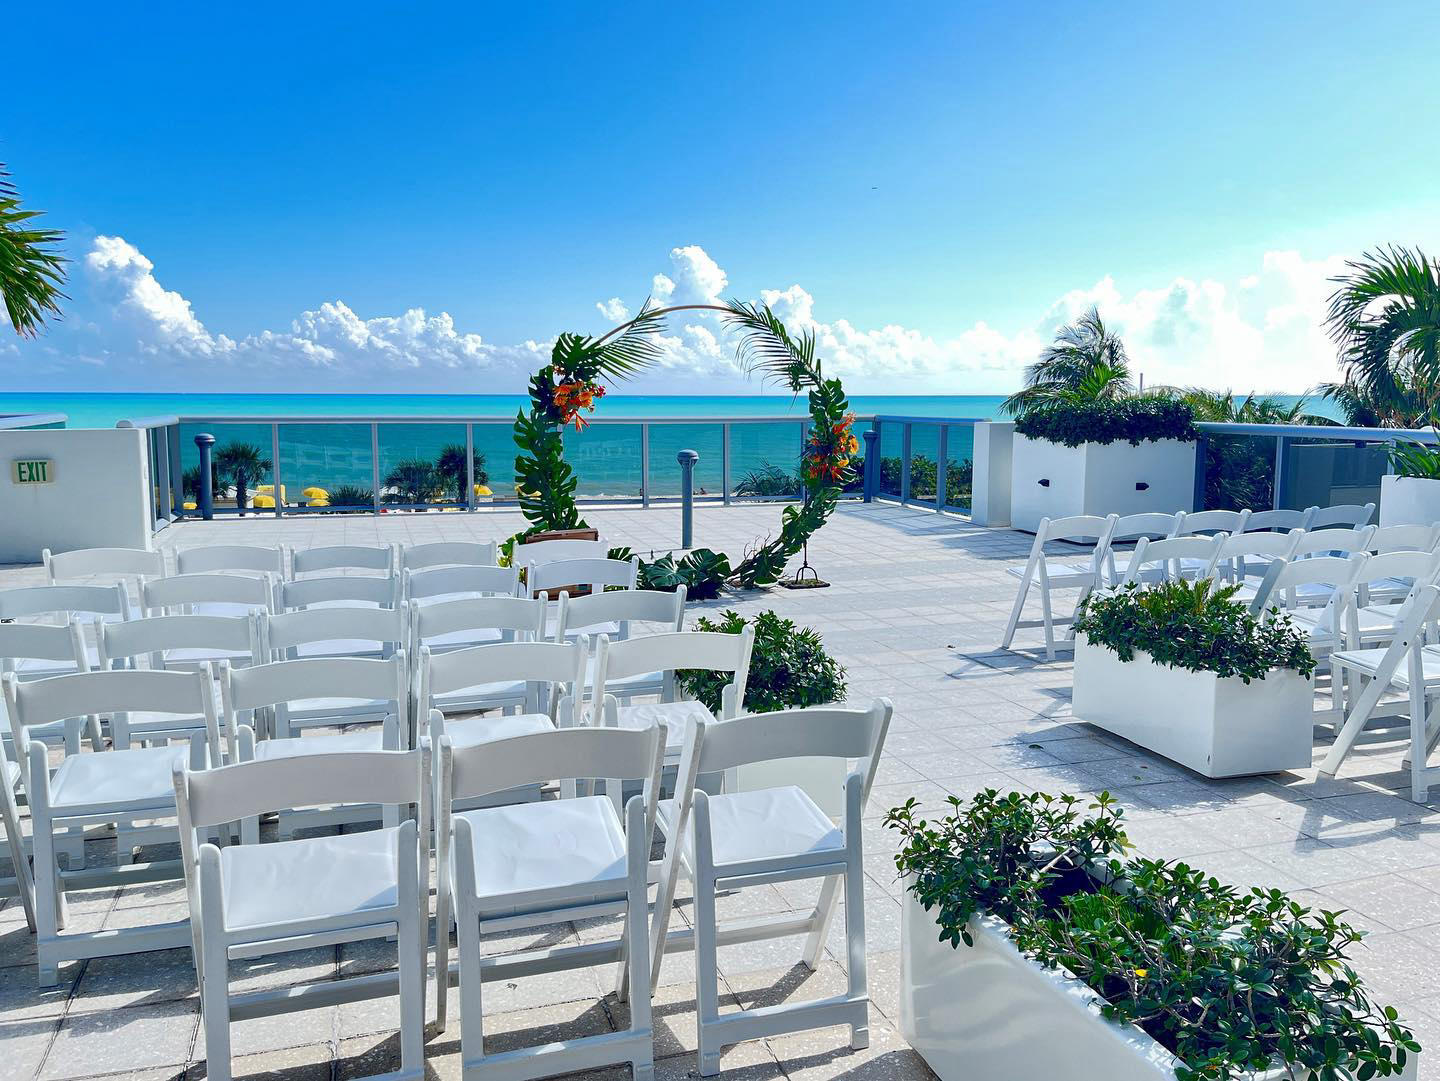 Hilton Cabana Miami Beach - What better wedding backdrop than where the sky meets the sea